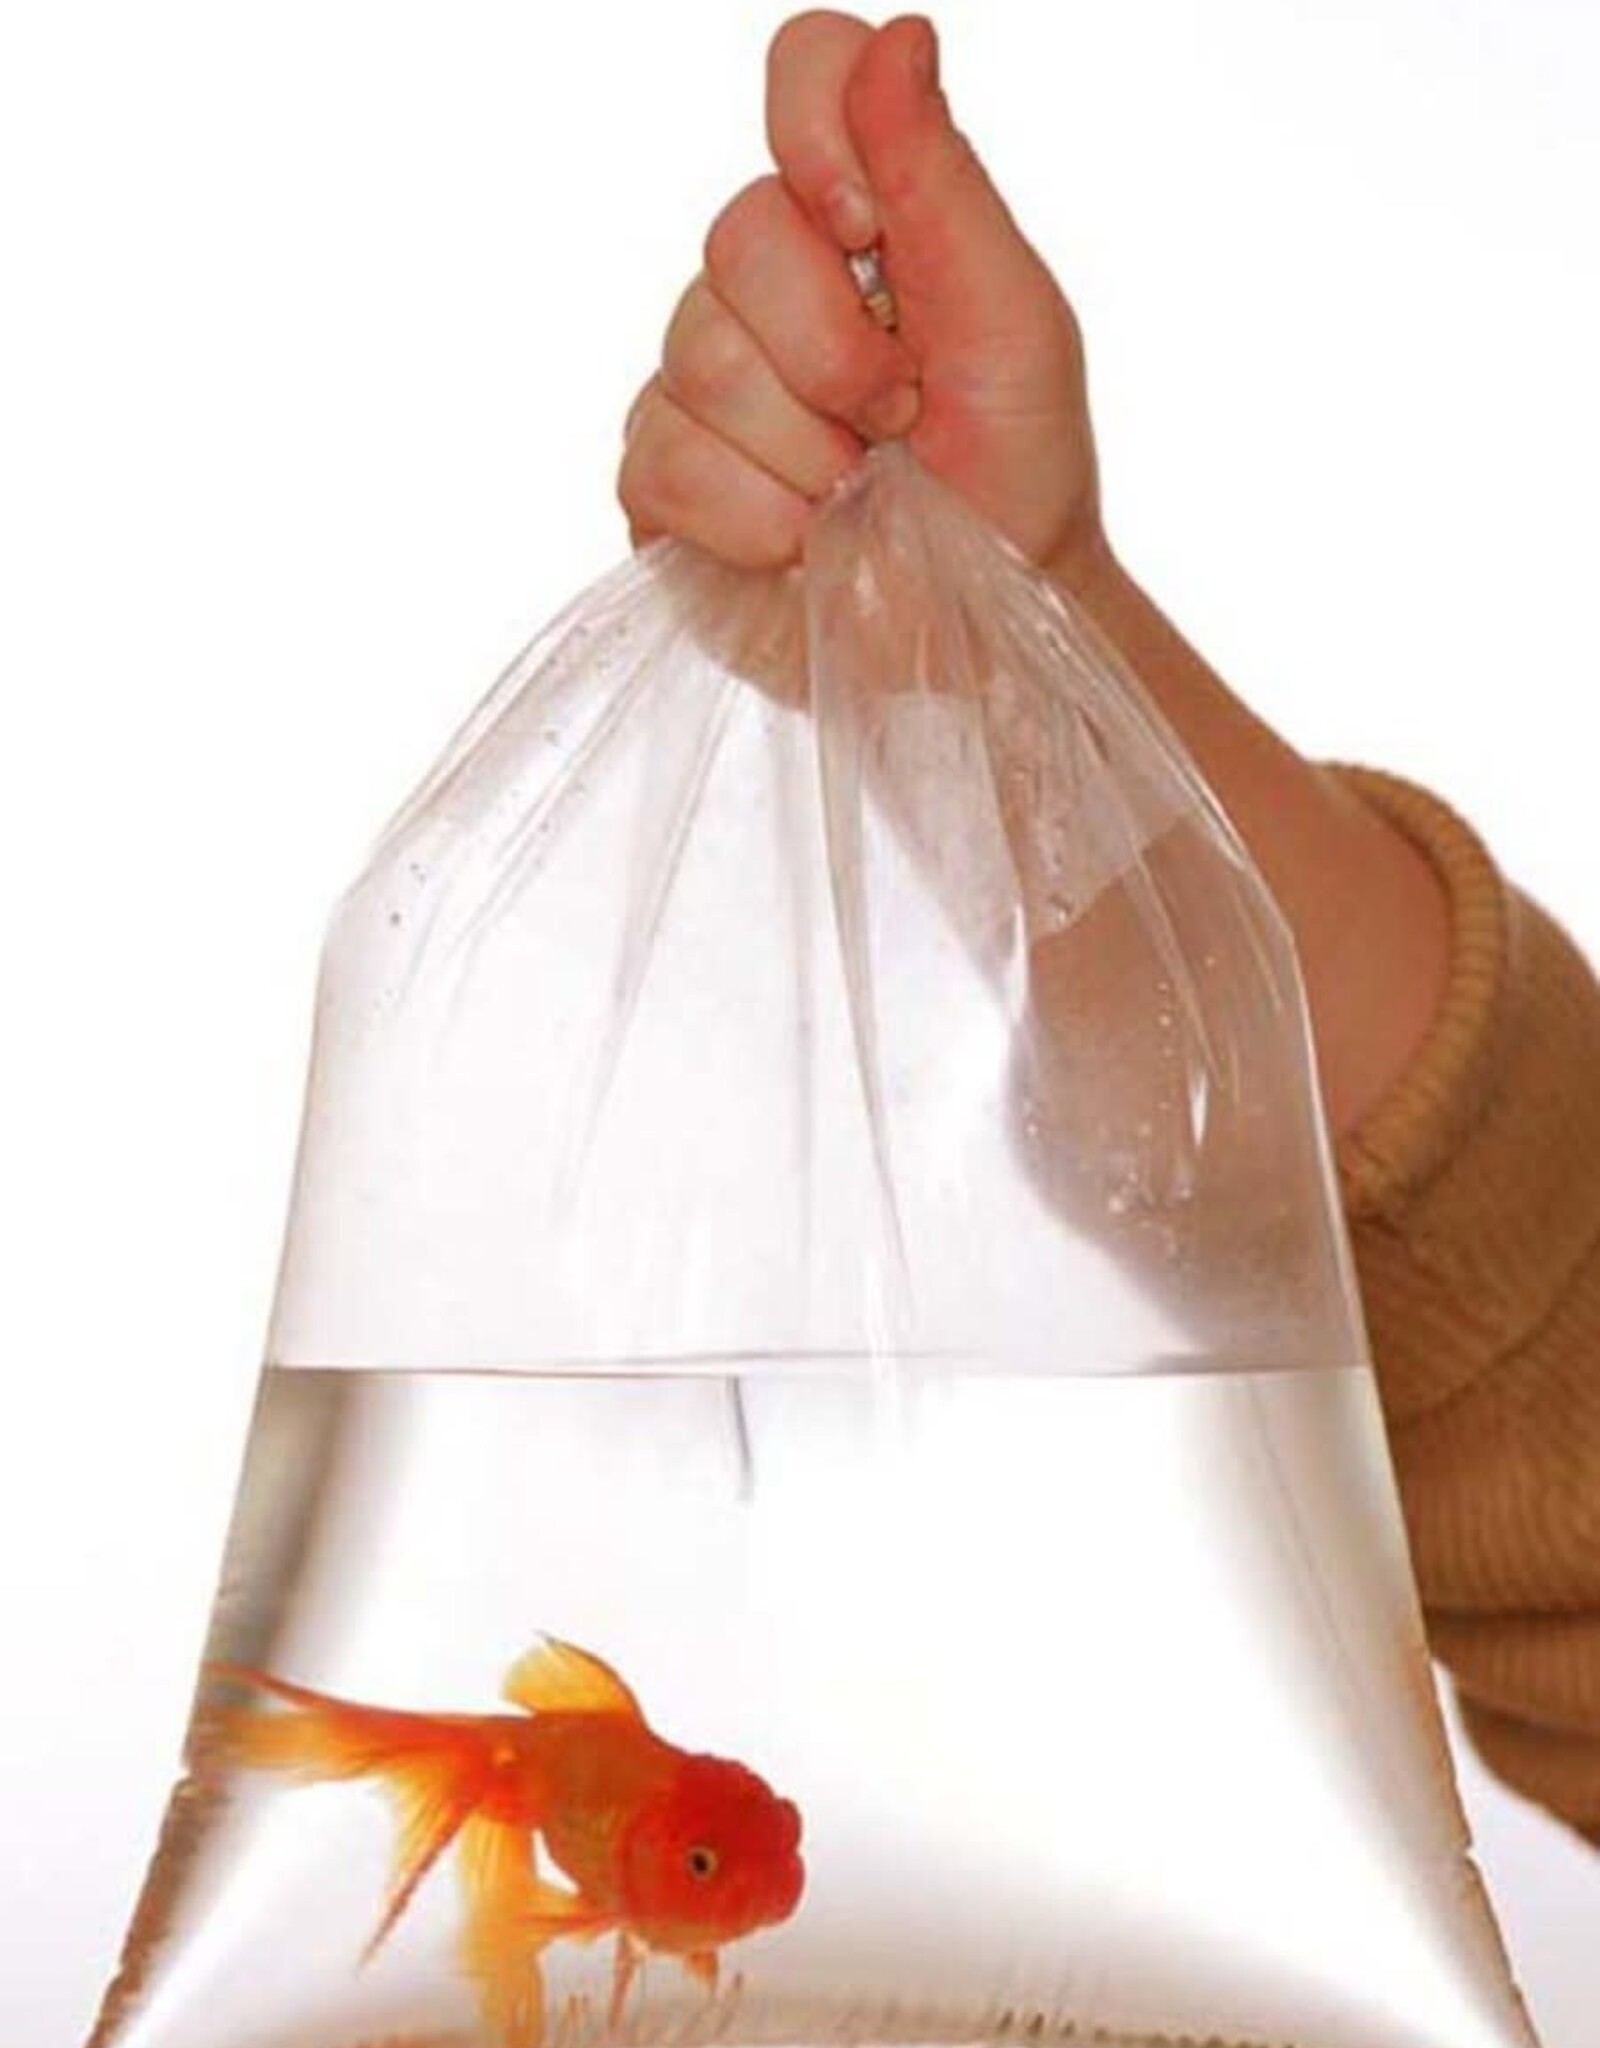 Gene Rodriguez Company Gen Bag Fish Bags 8x15 1000pk STORE SUPPLY!